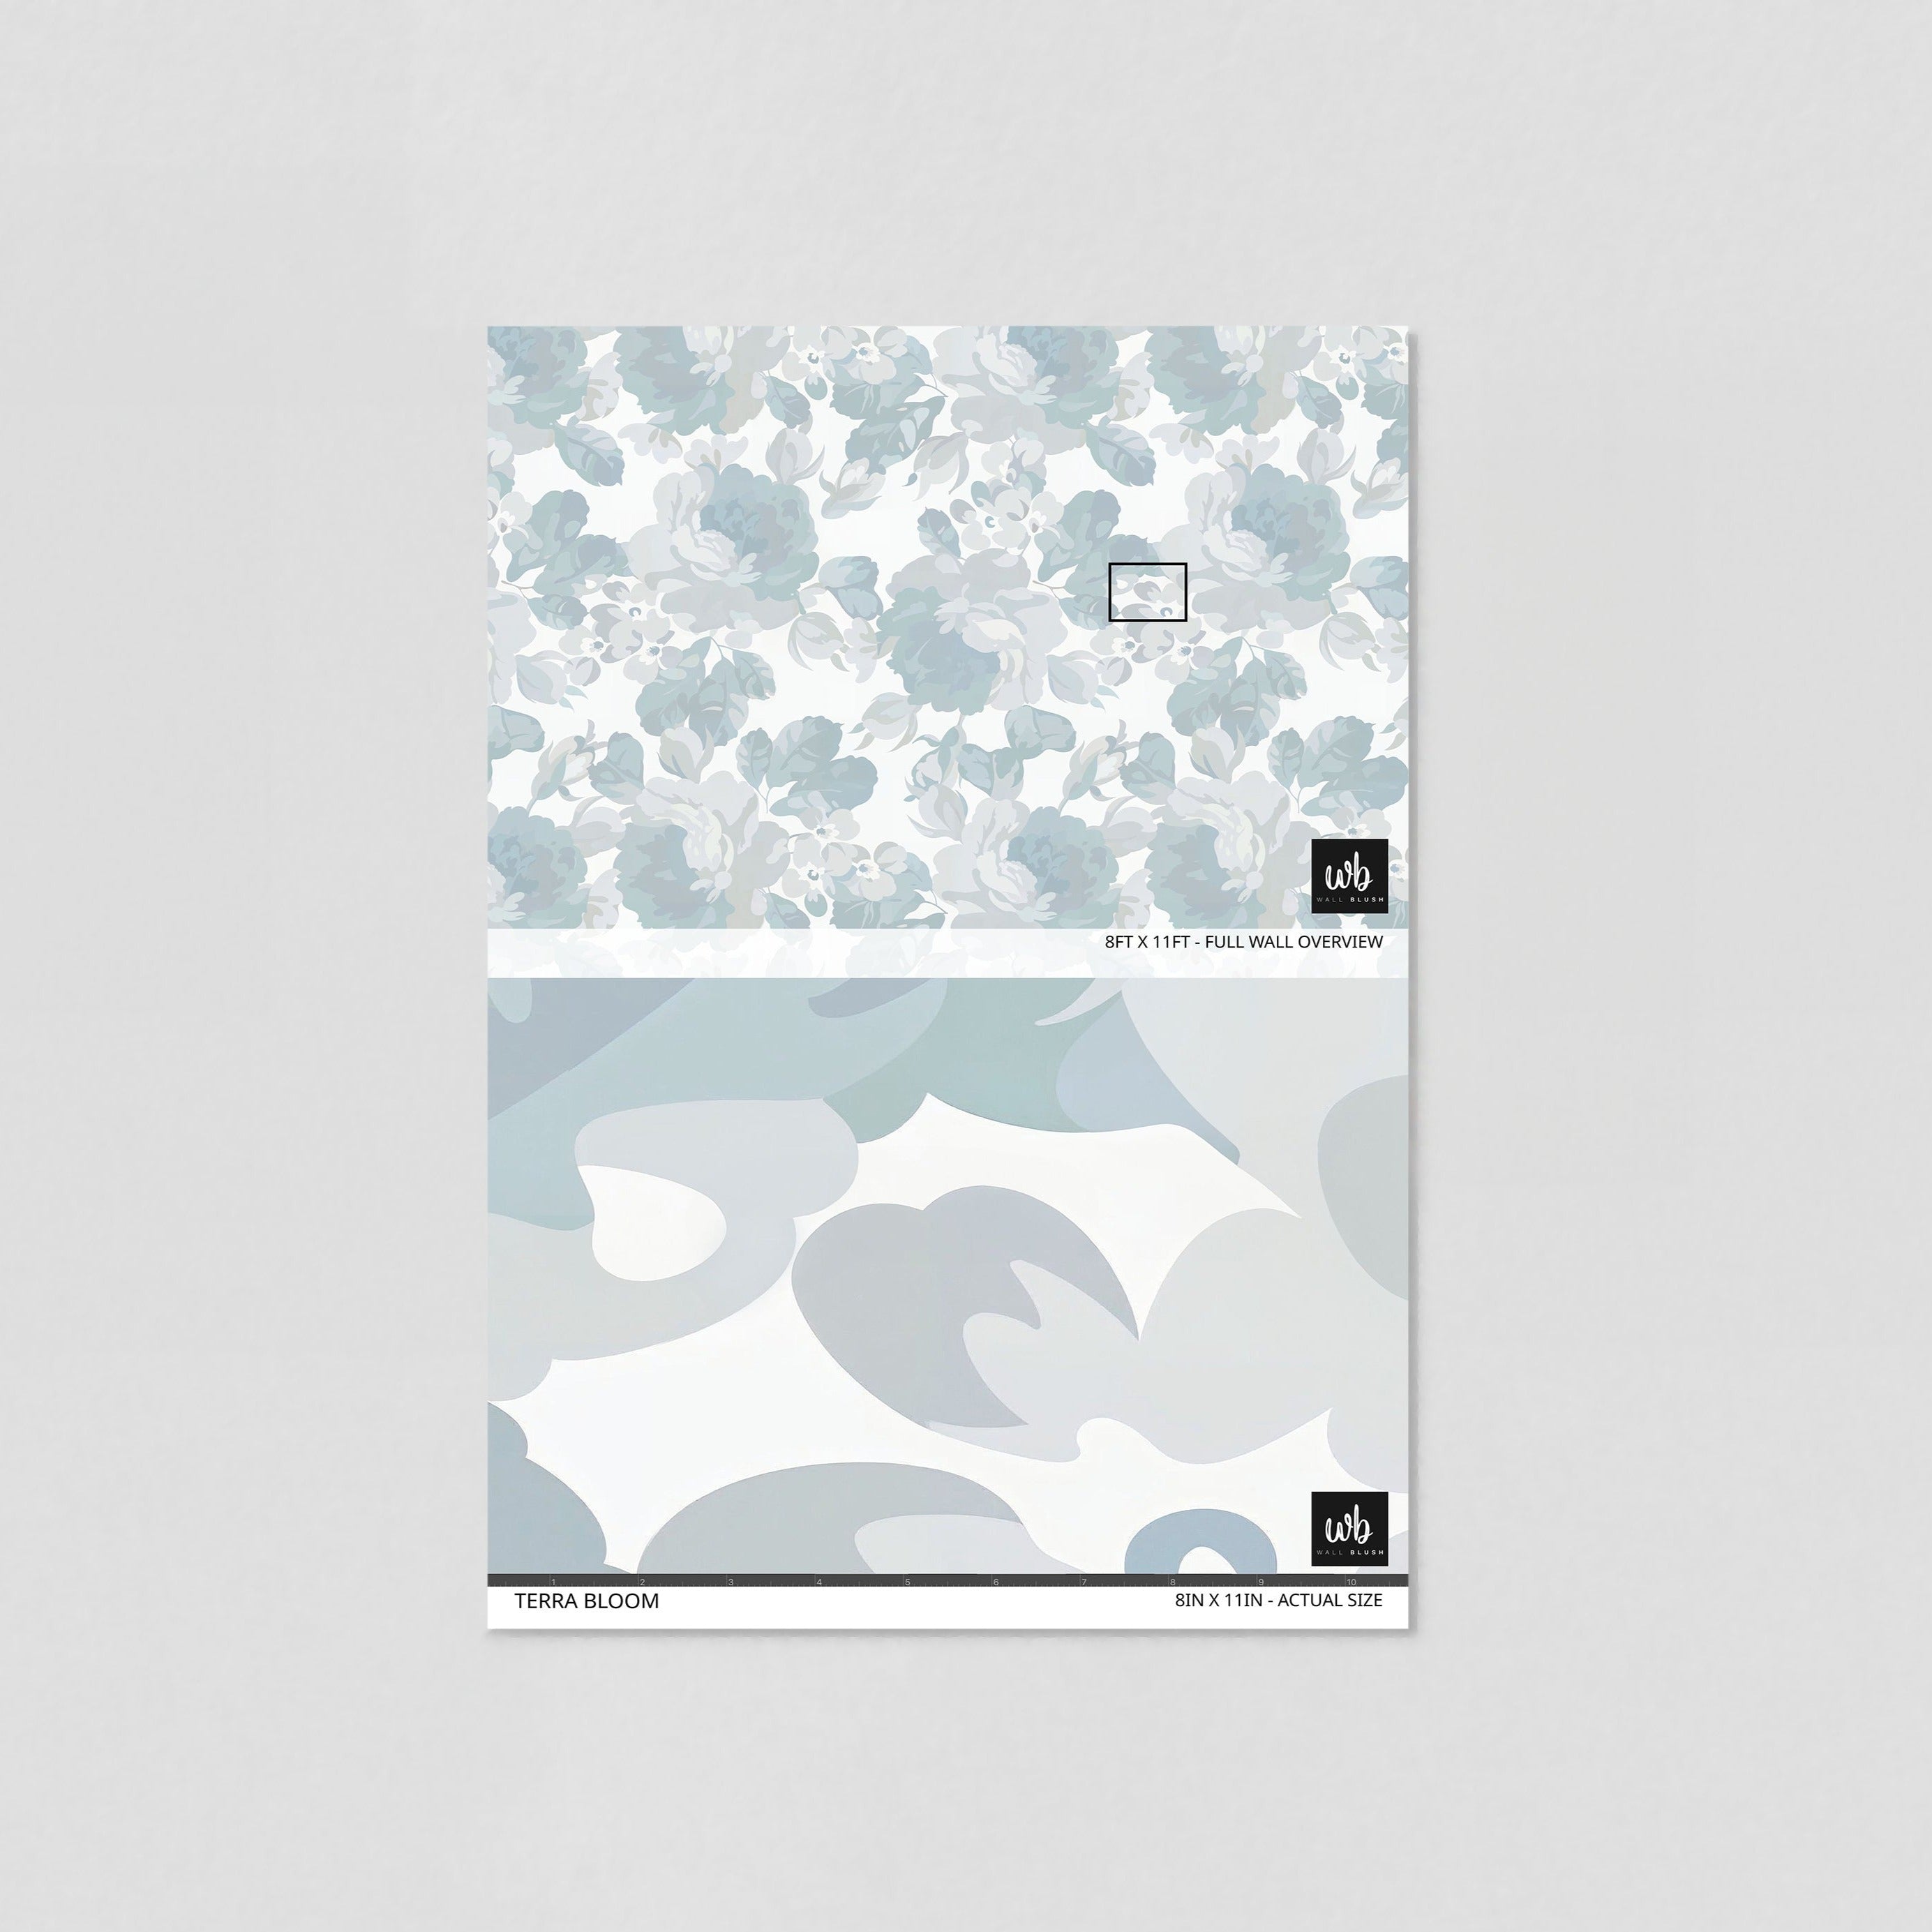 "Terra Bloom Wallpaper by Wall Blush, elegant floral design in a sample presentation, focus on detail for home decor."